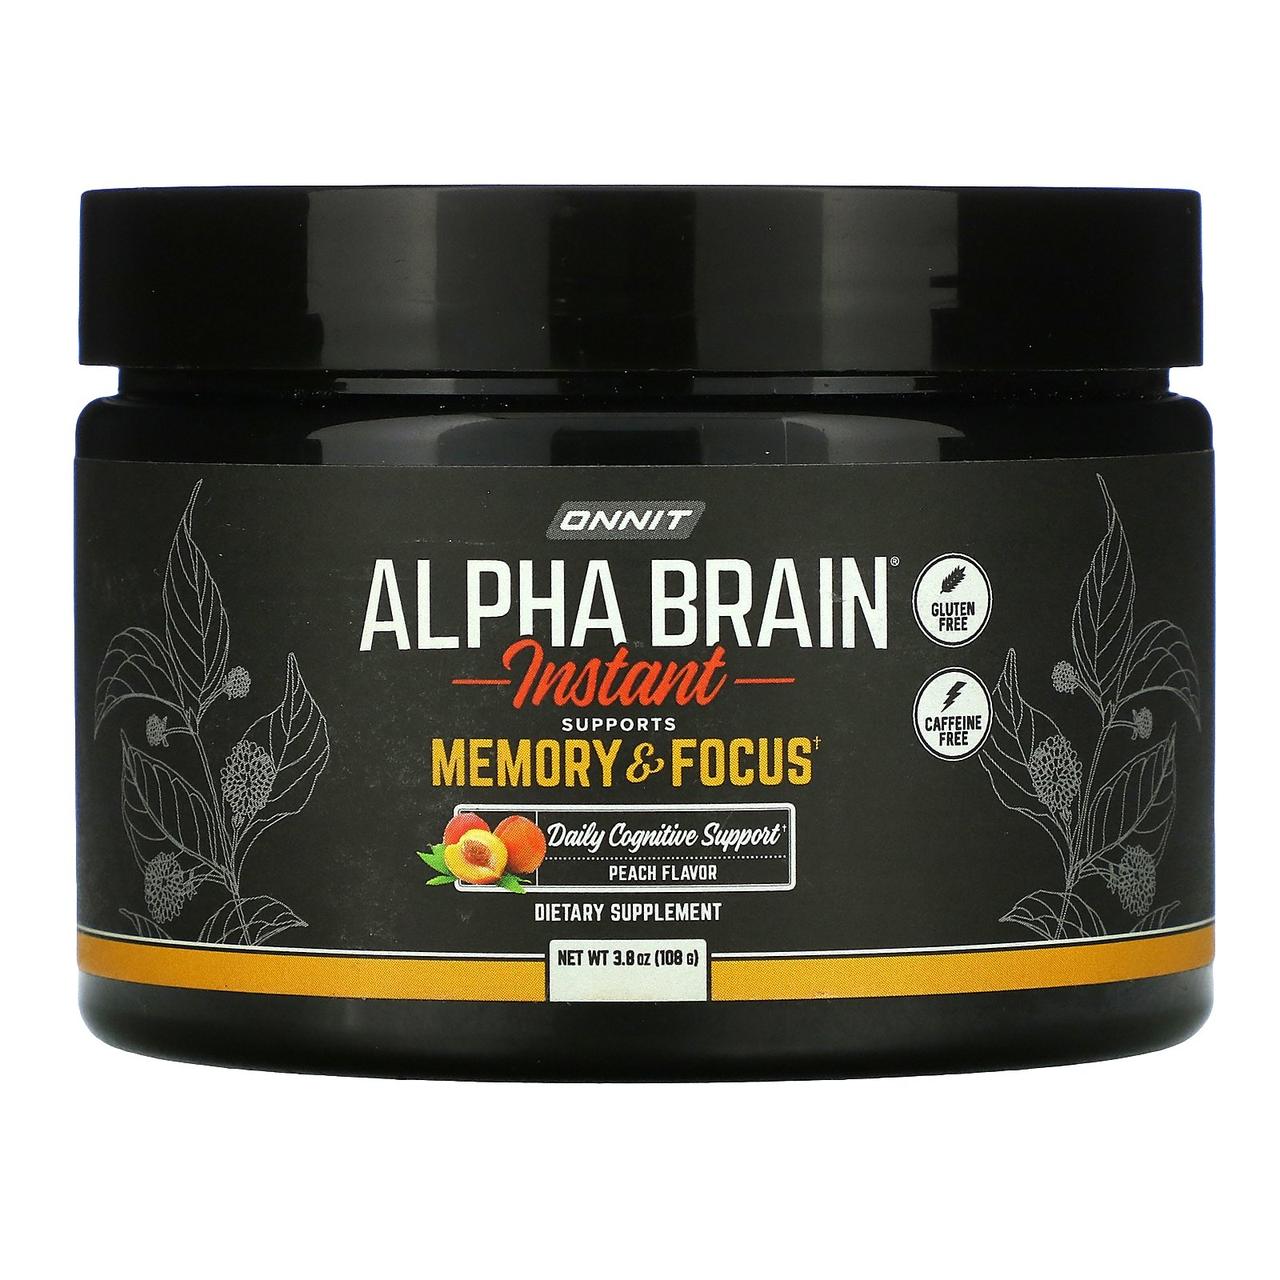 Onnit, Alpha Brain Instant, Memory & Focus, Natural Peach Flavor, 3.8 oz (108 g)